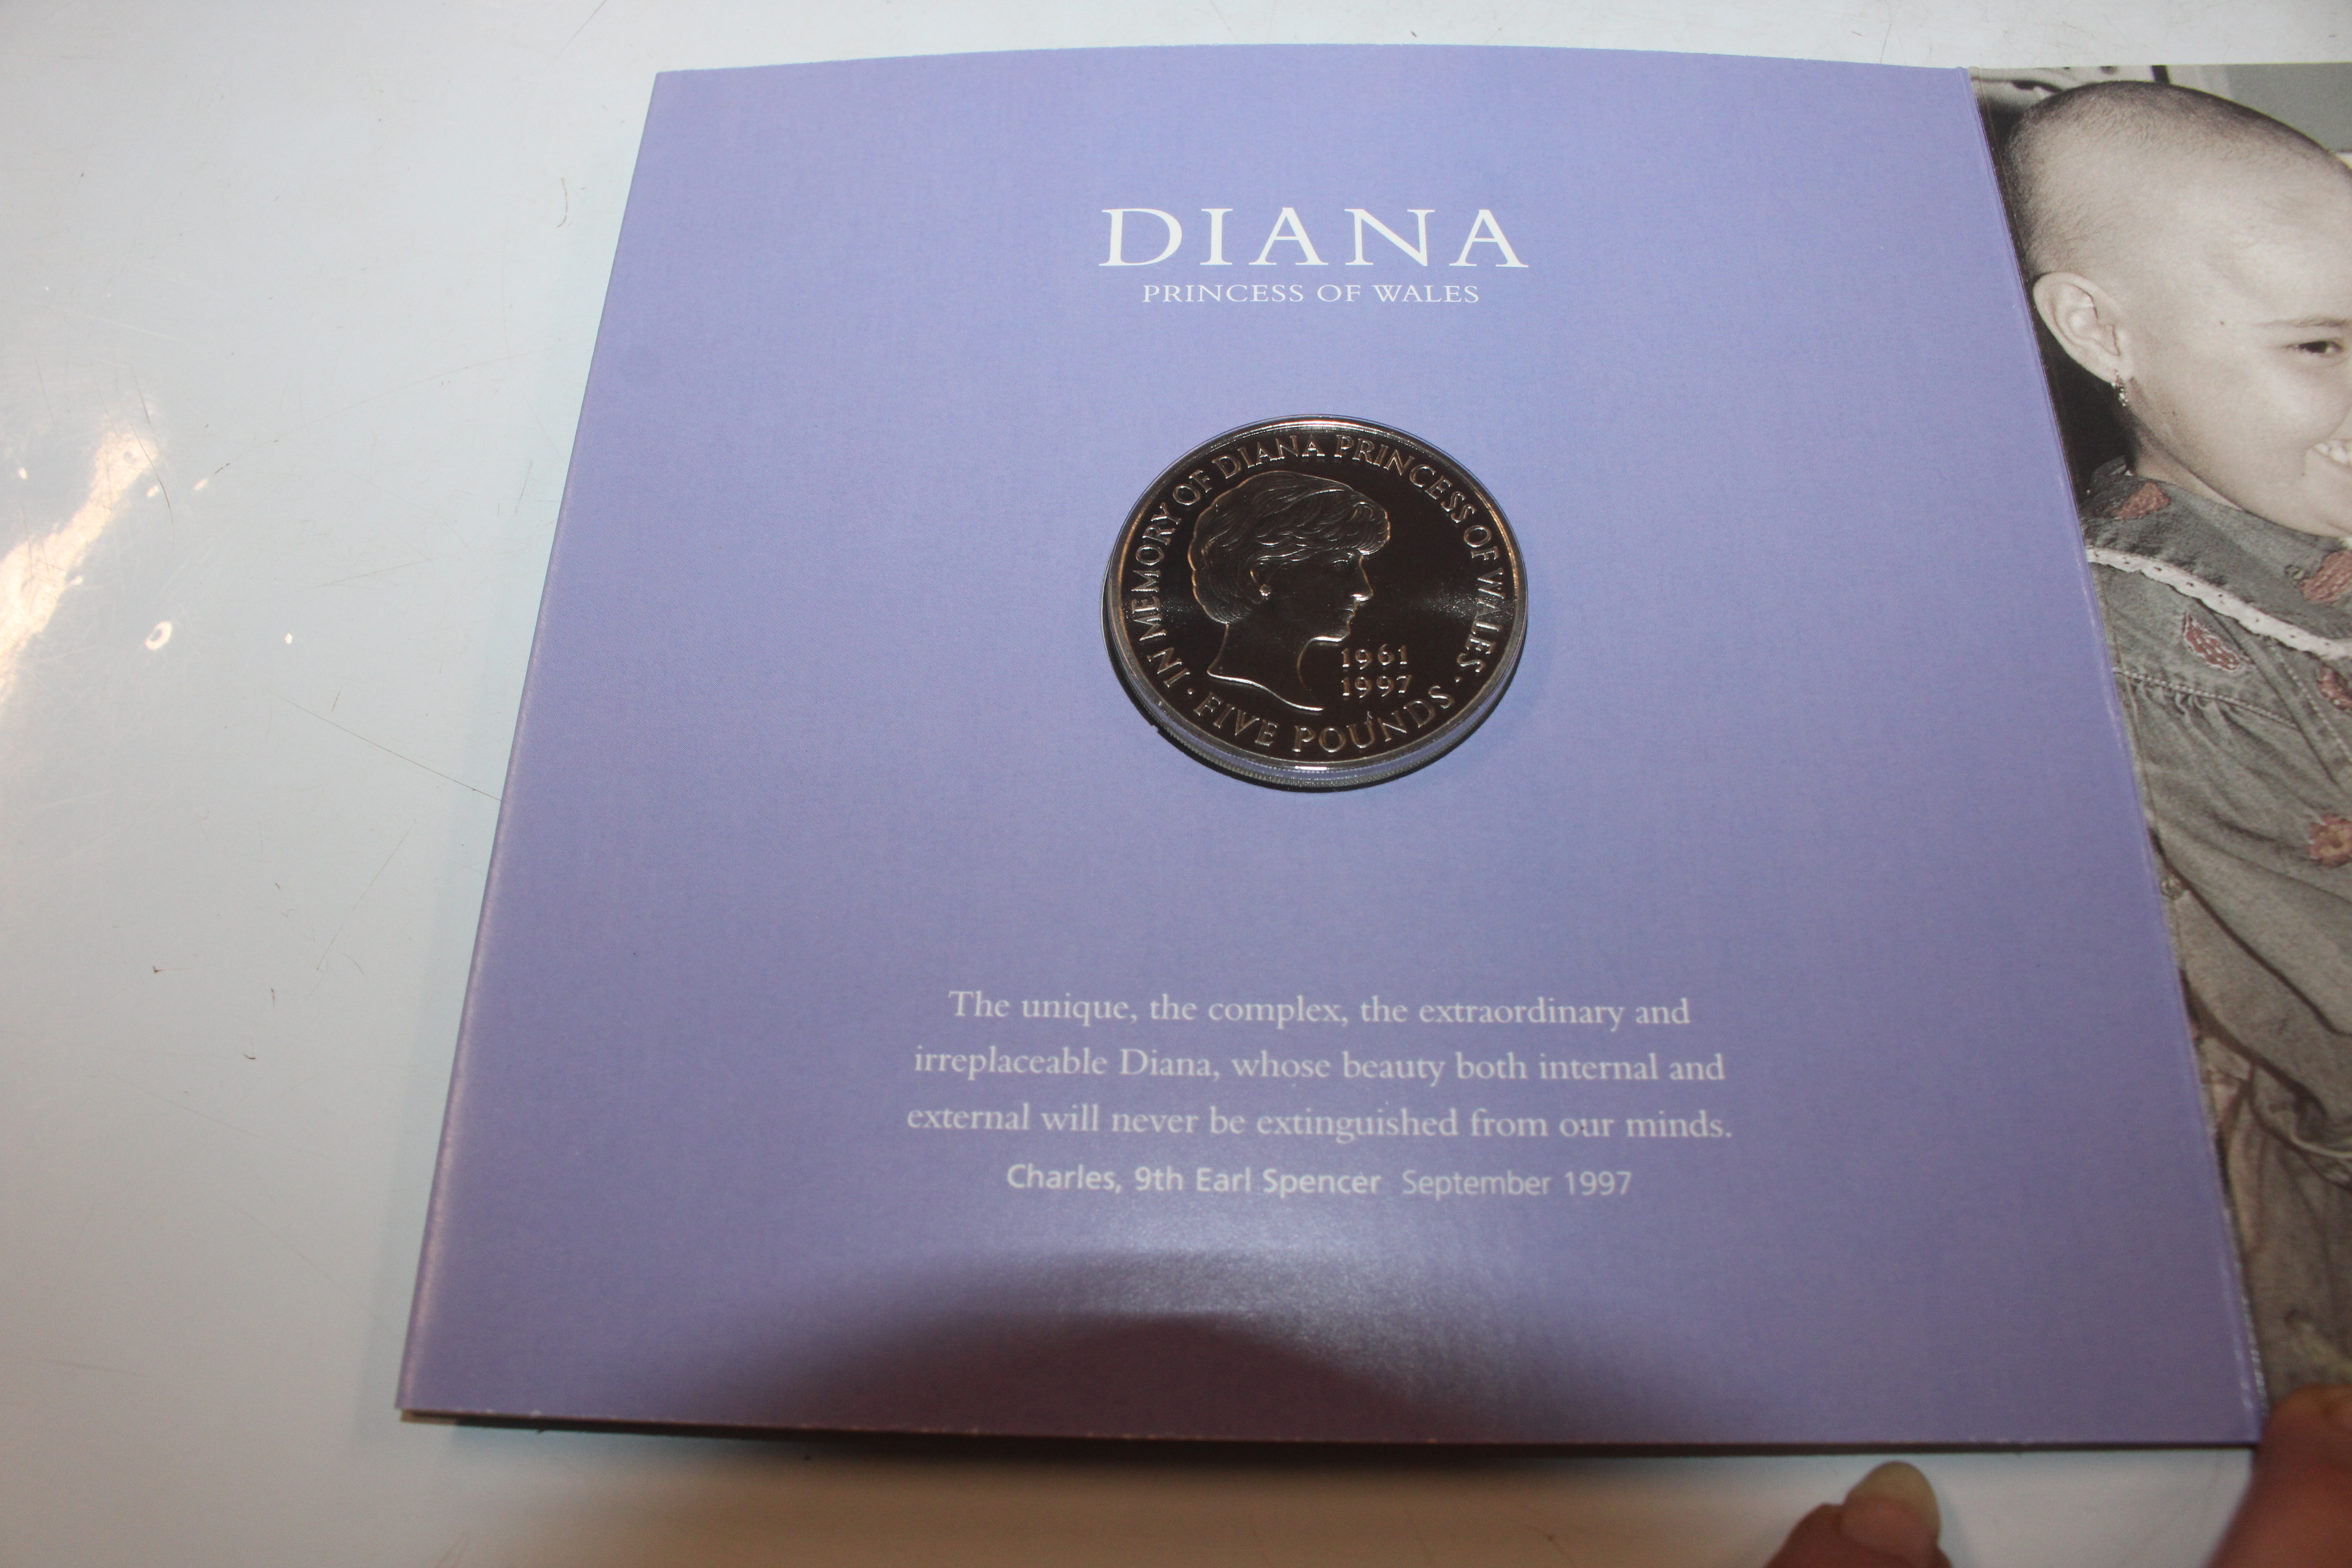 A Diana Princess of Wales memorial coin; a bag of - Image 2 of 5